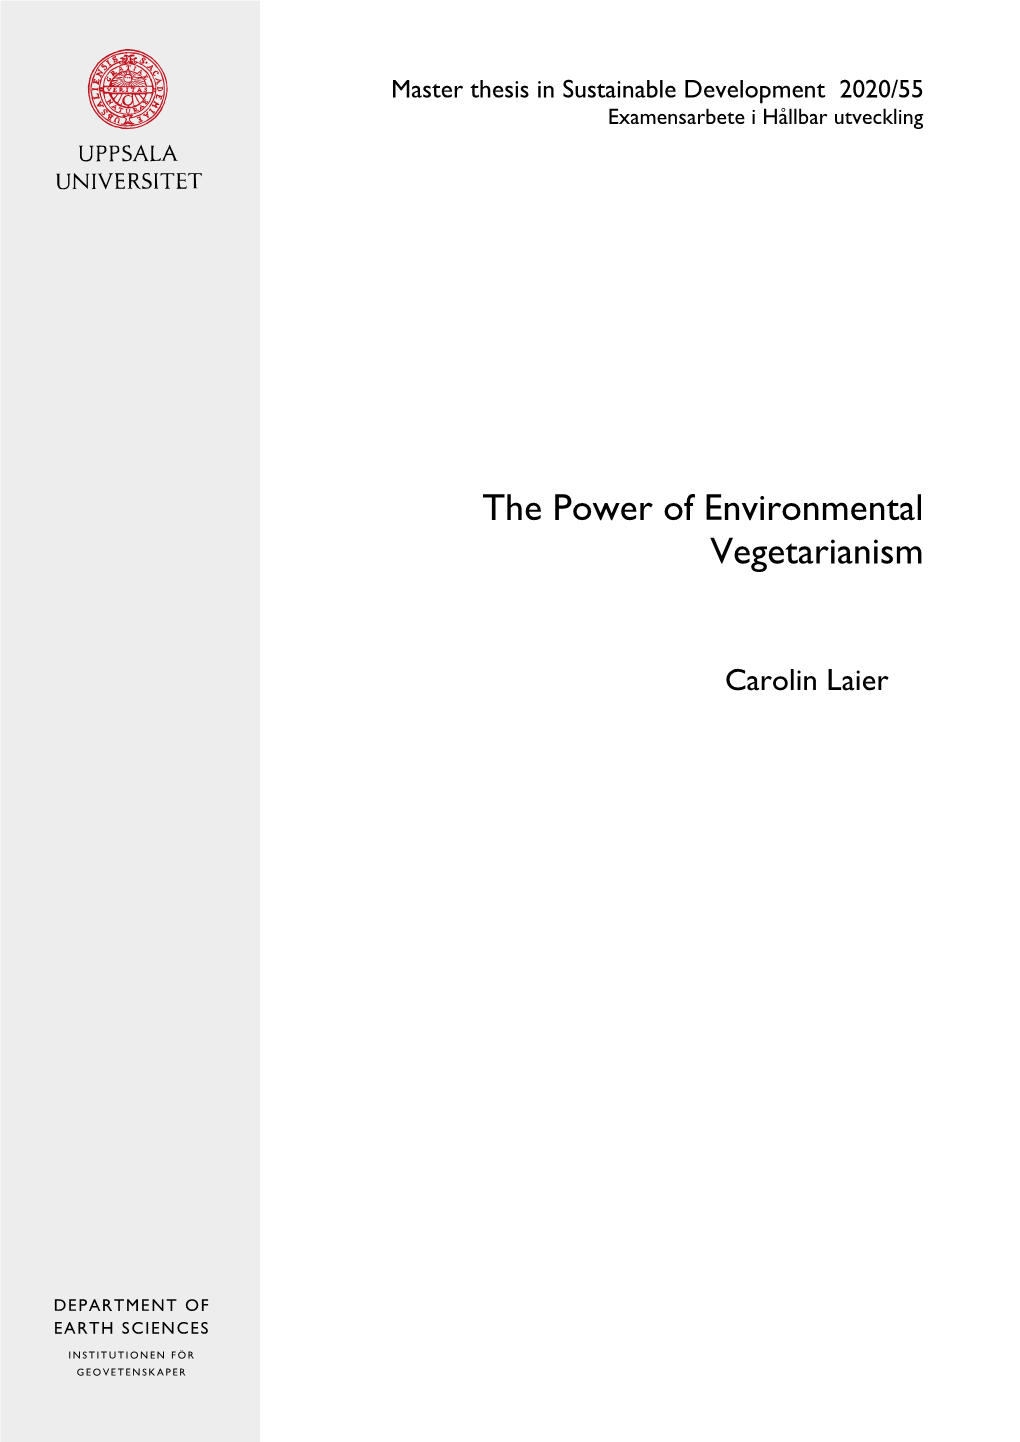 The Power of Environmental Vegetarianism